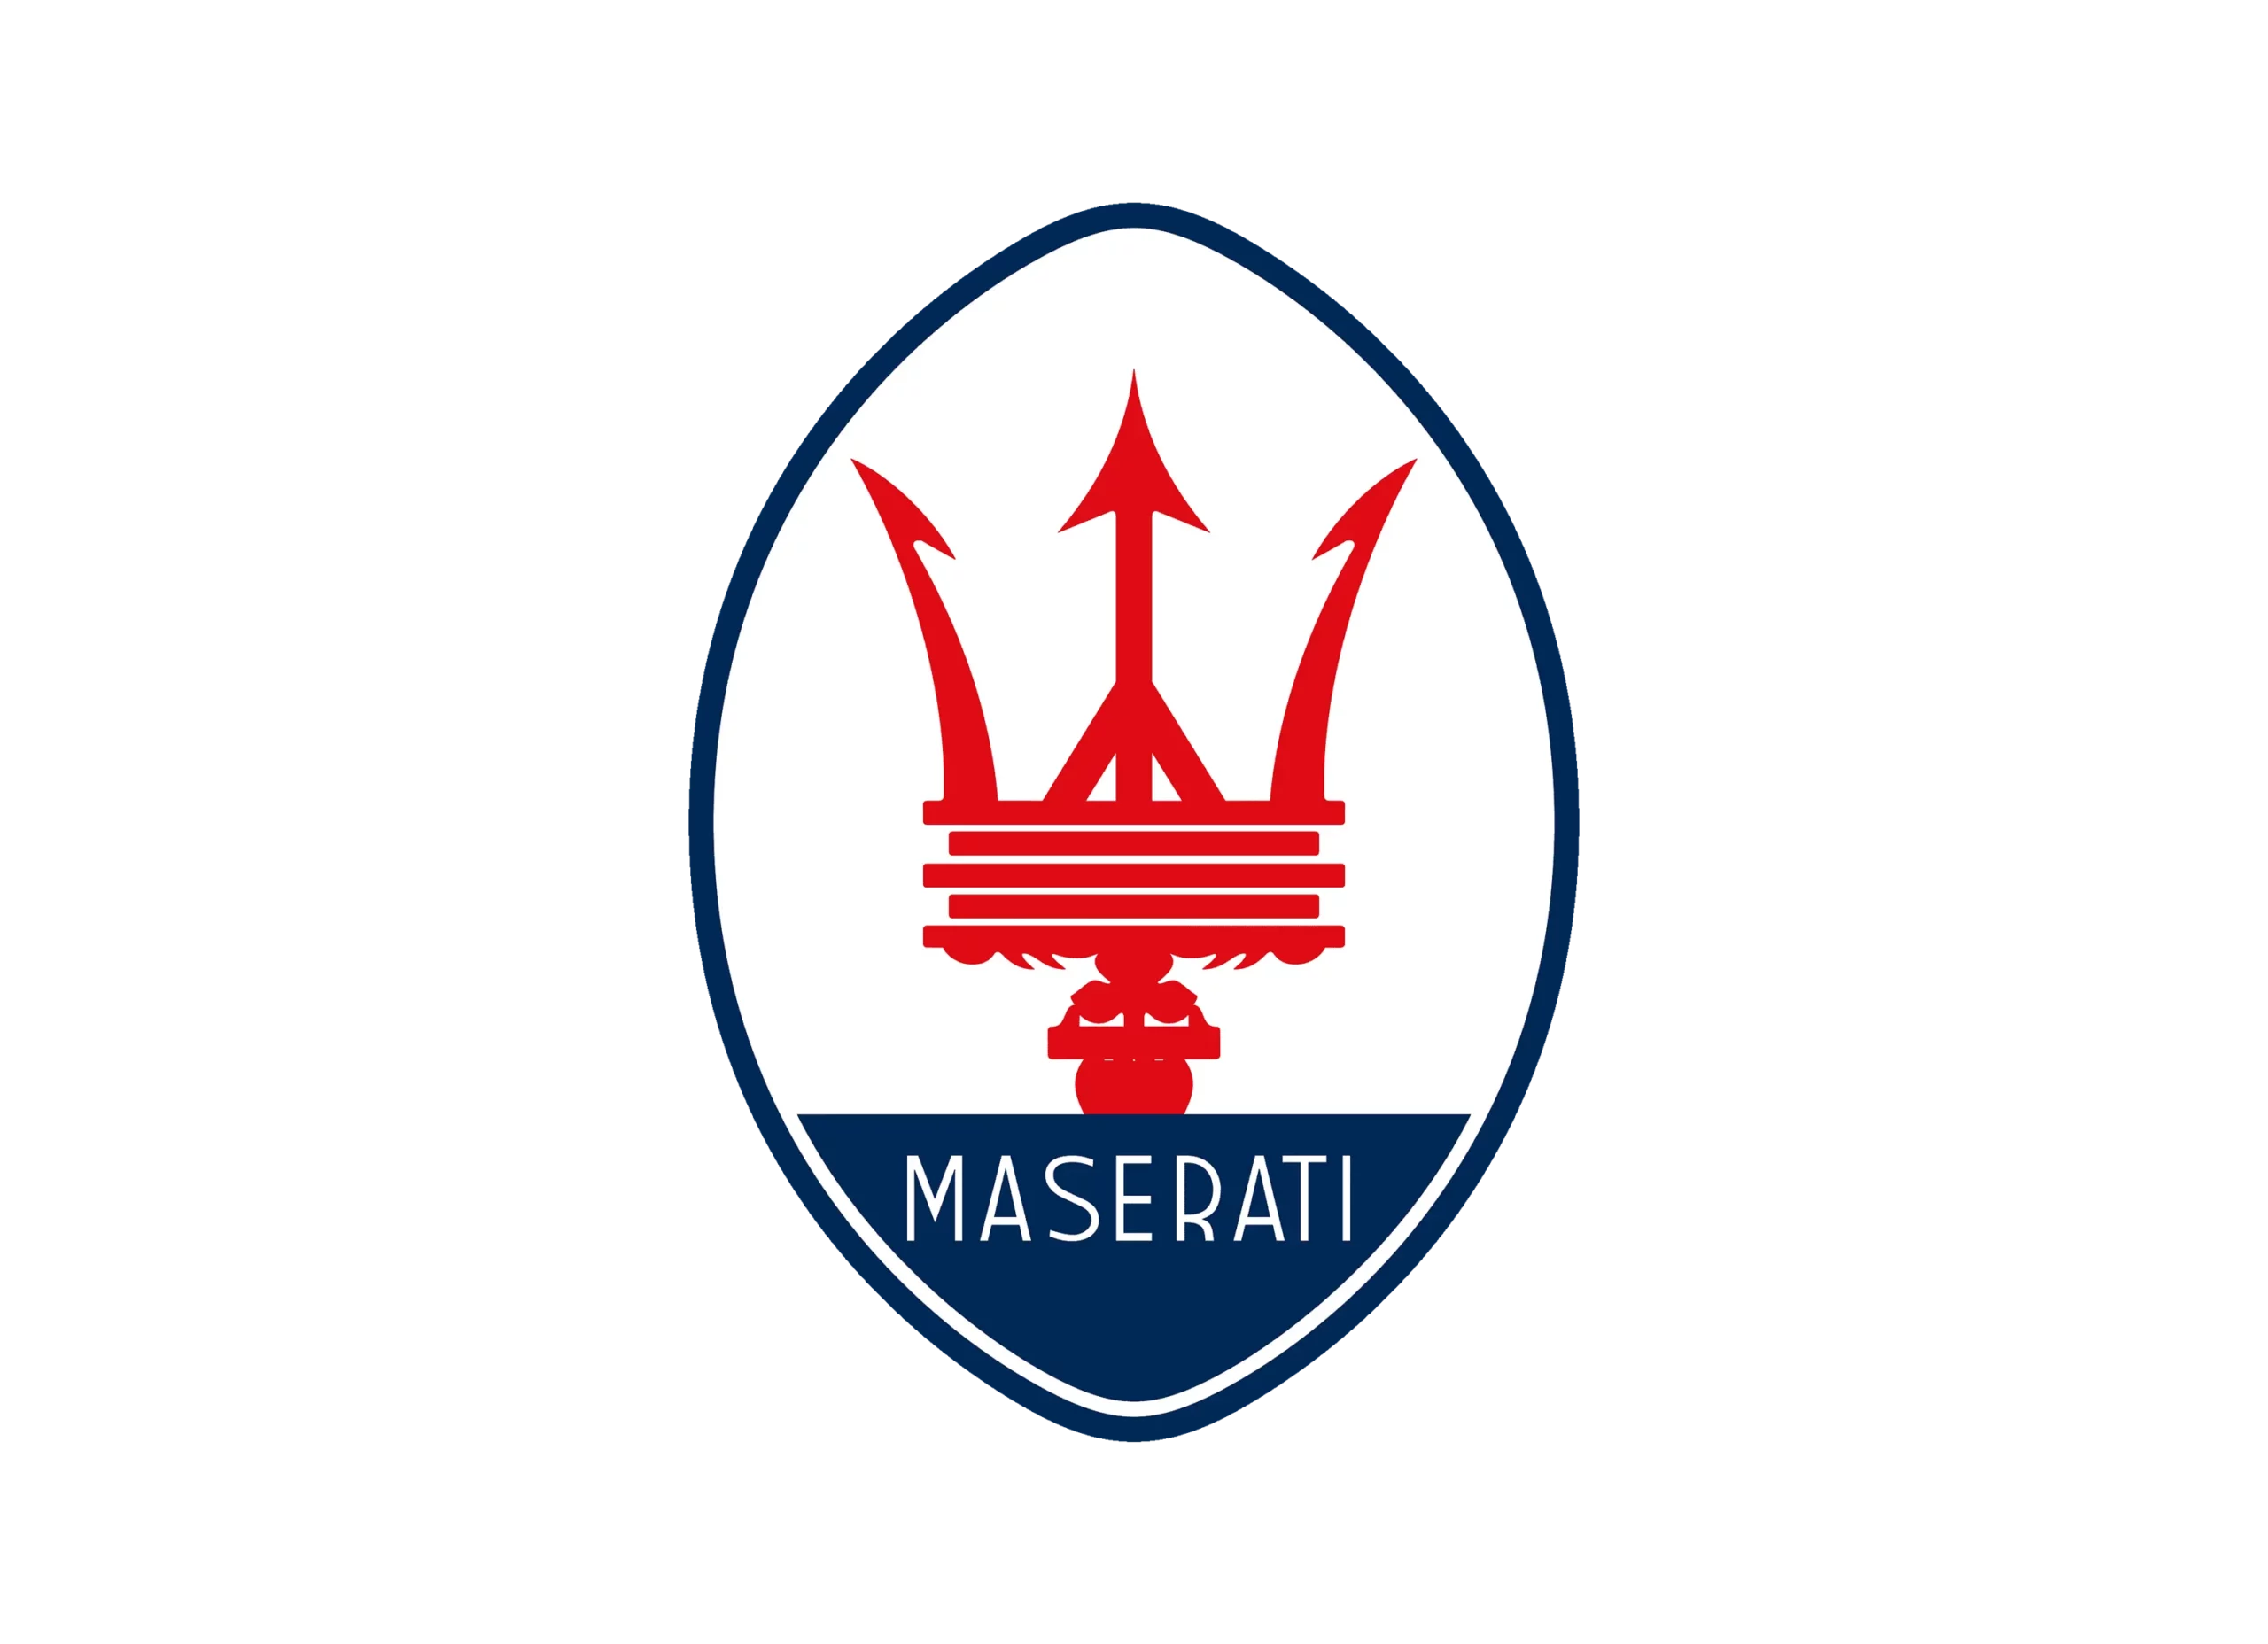 Maserati logo 1985-1997